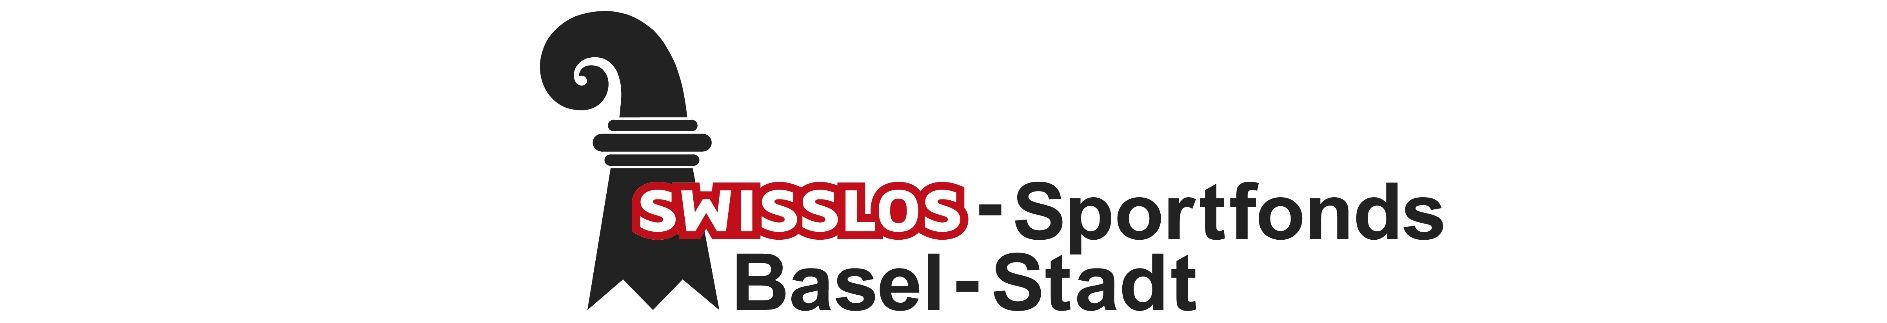 Swisslosfond Basel-Stadt Logo